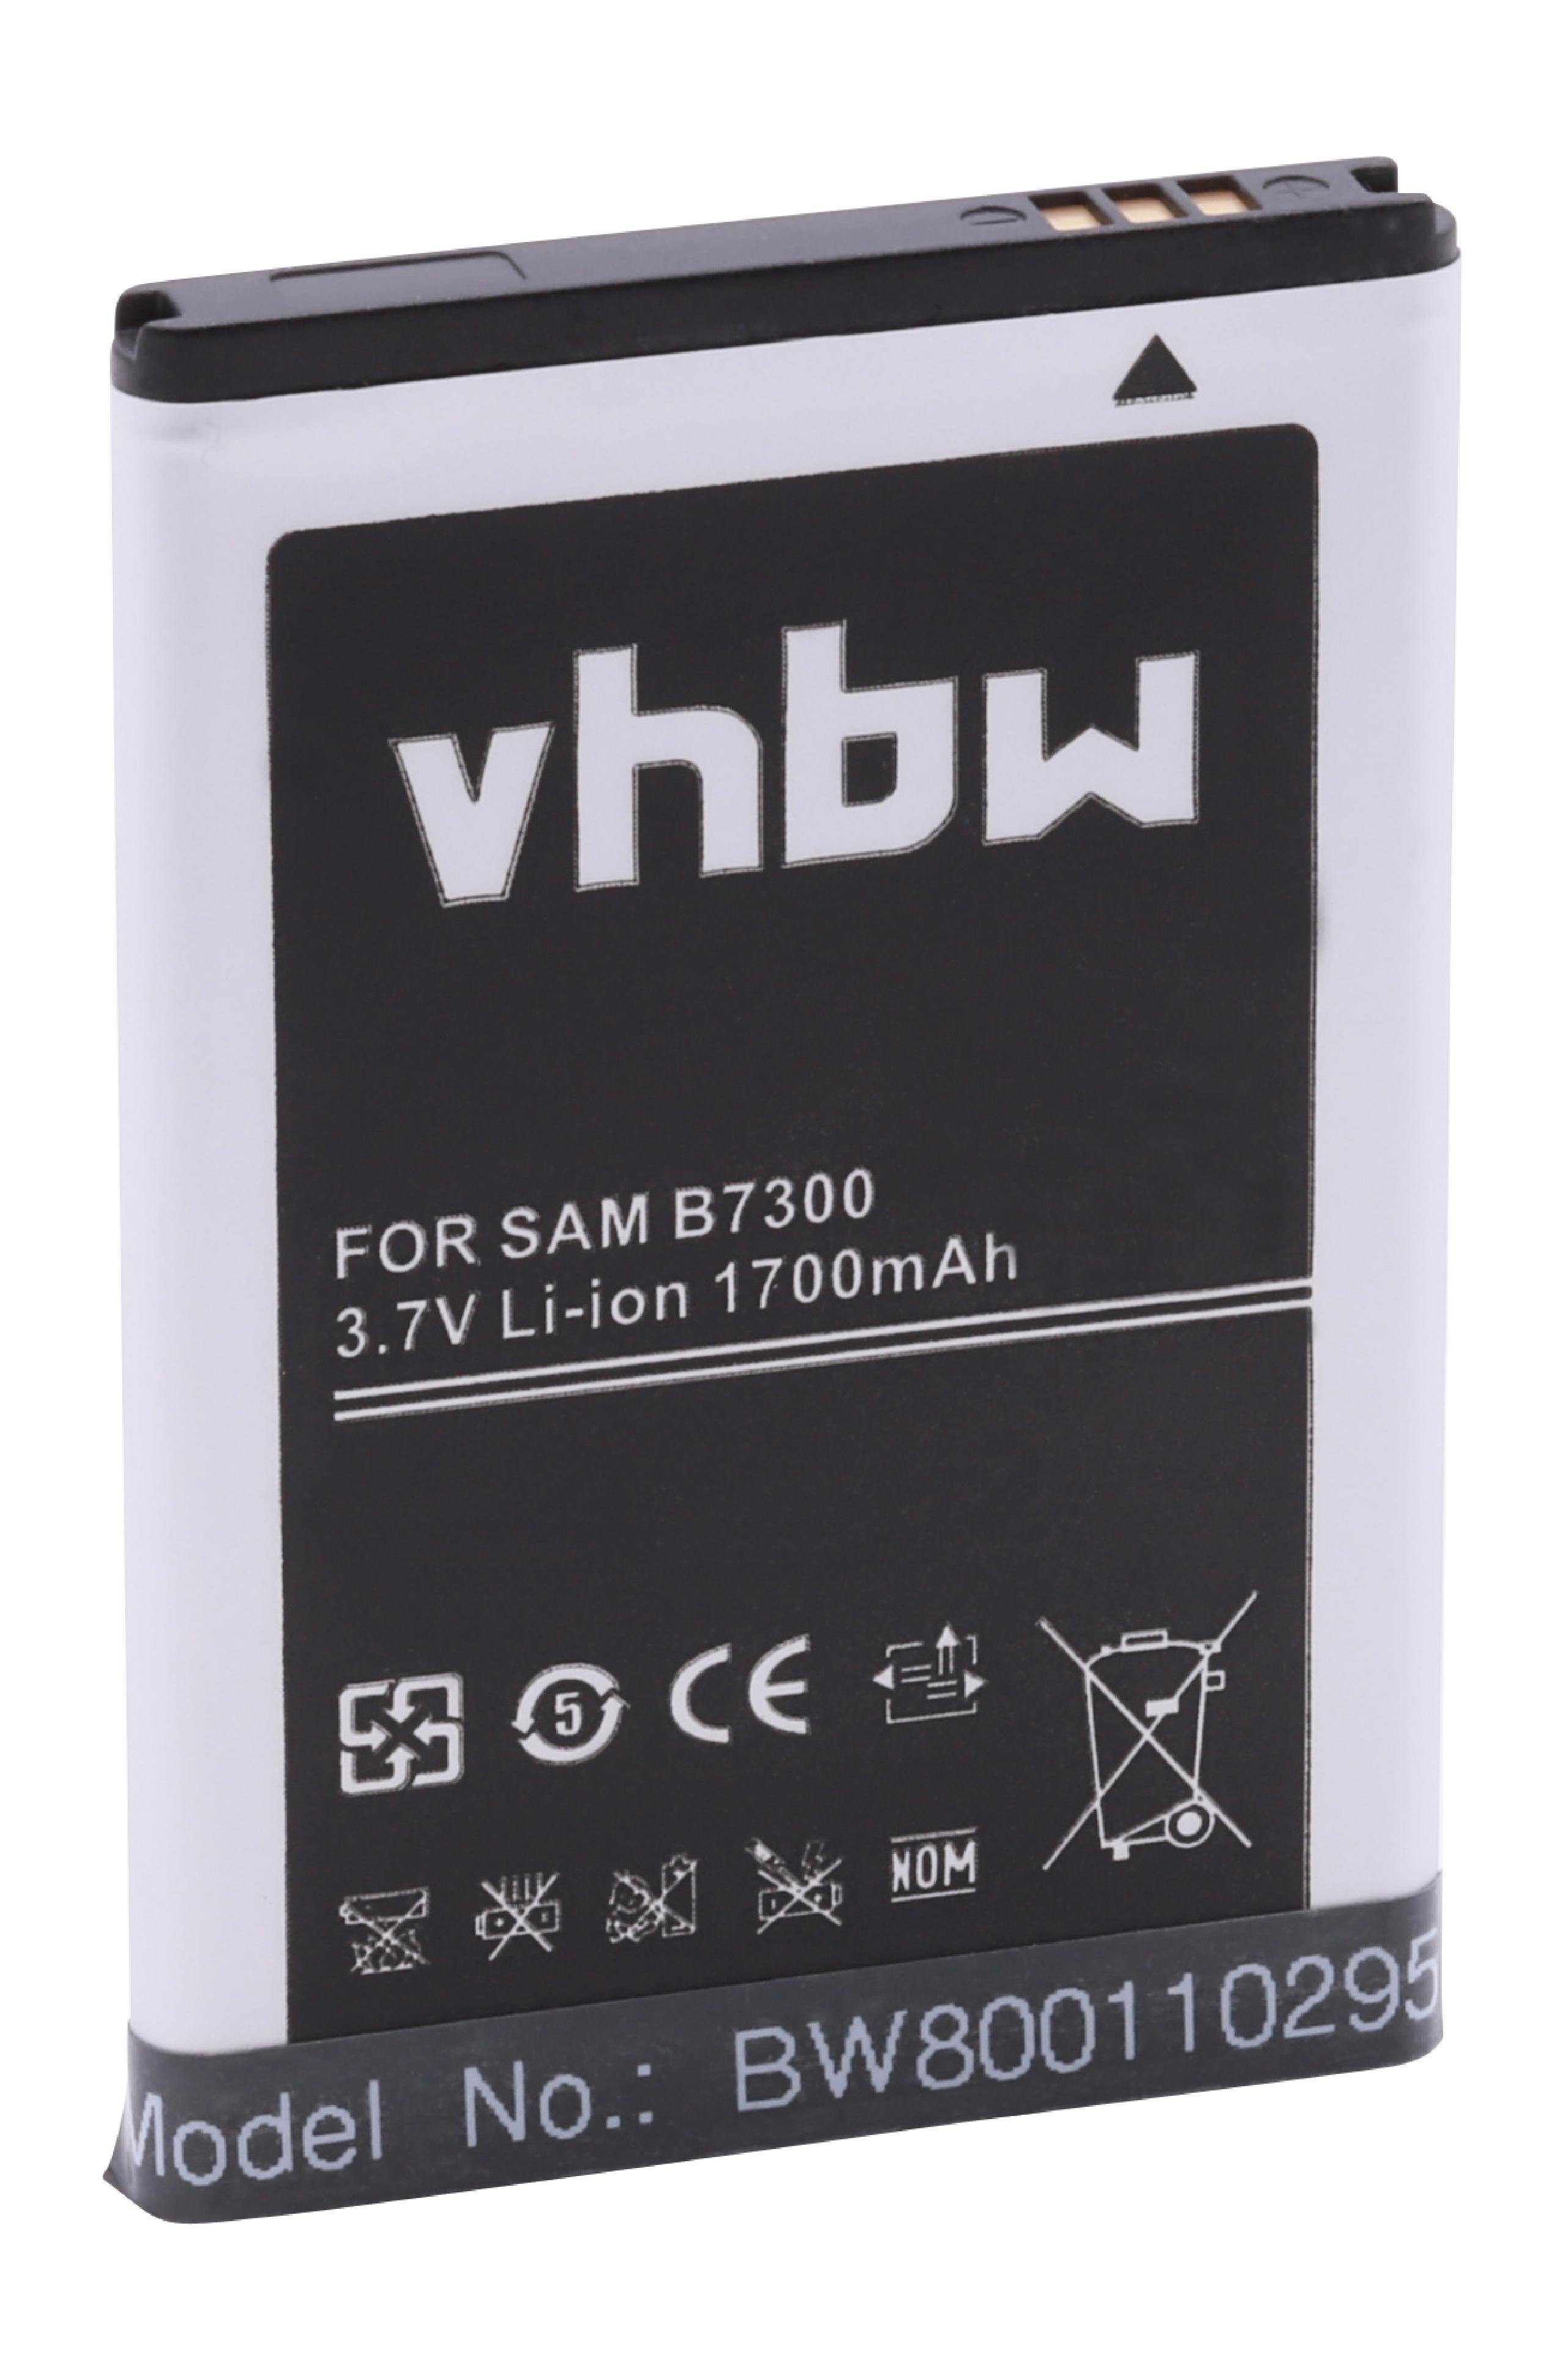 vhbw kompatibel mit Vodafone H1360 Smartphone-Akku 1700 V) (3,7 Li-Ion mAh